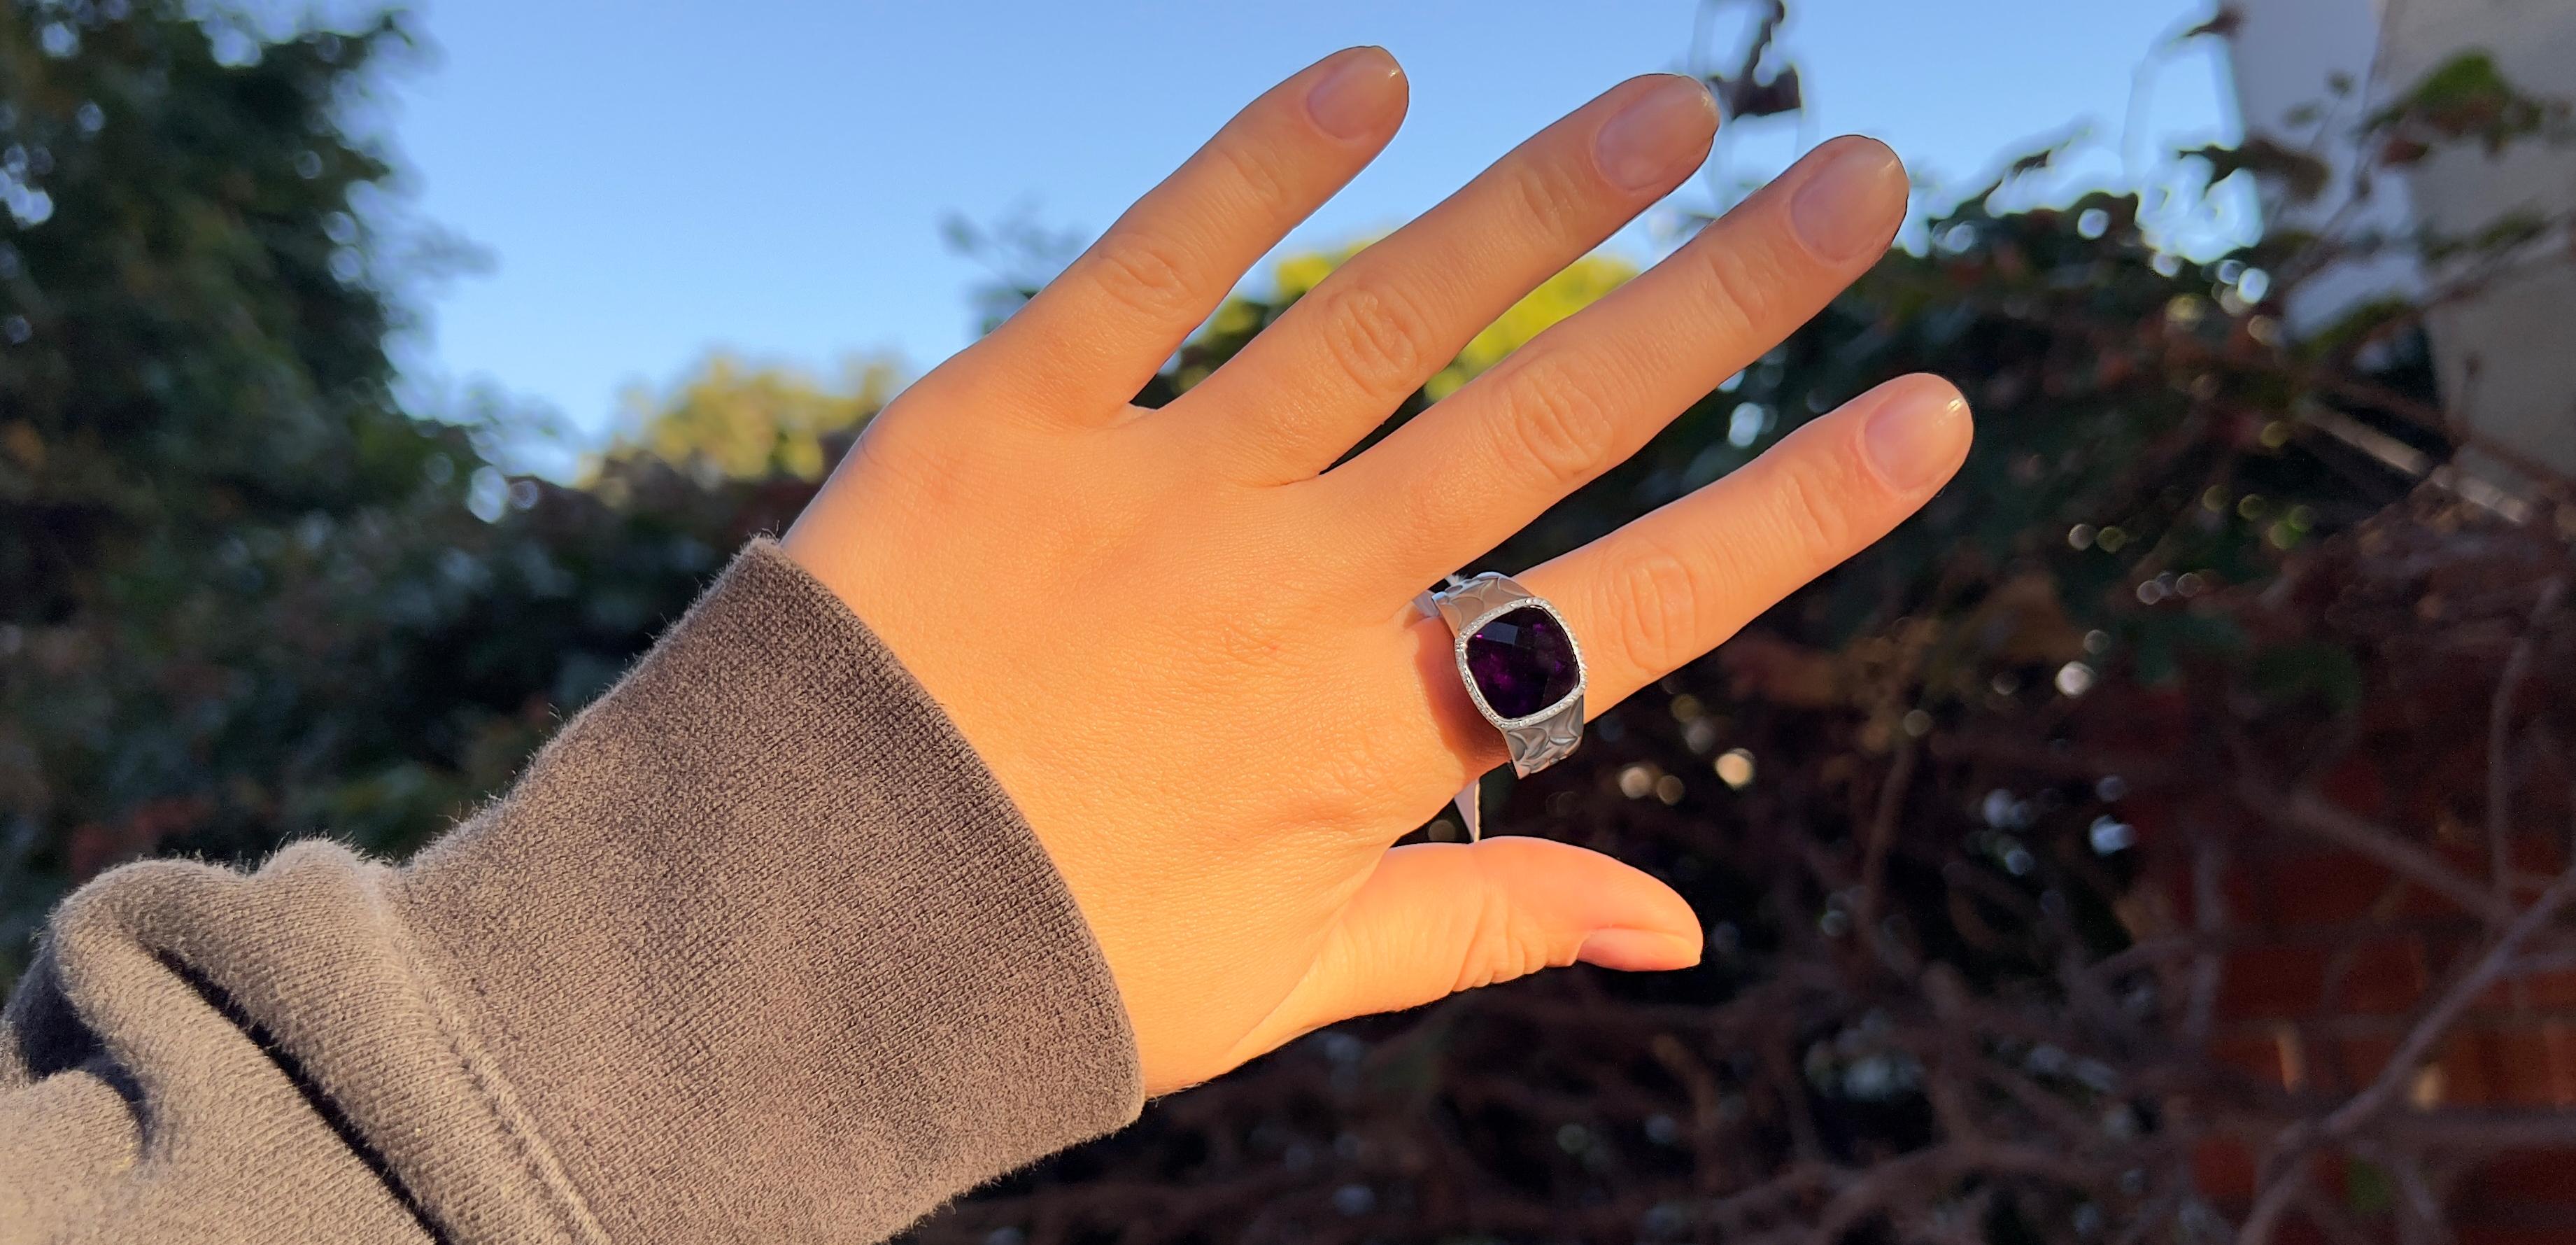 Siberian Amethyst = 12 Carat
(Cut: Mixed, Color: Purple, Origin: Natural)
Diamond = 0.20 Carats
(Cut: Round, Color: F-G, Clarity: VS)
Metal = 14K White Gold
Ring Size = 9